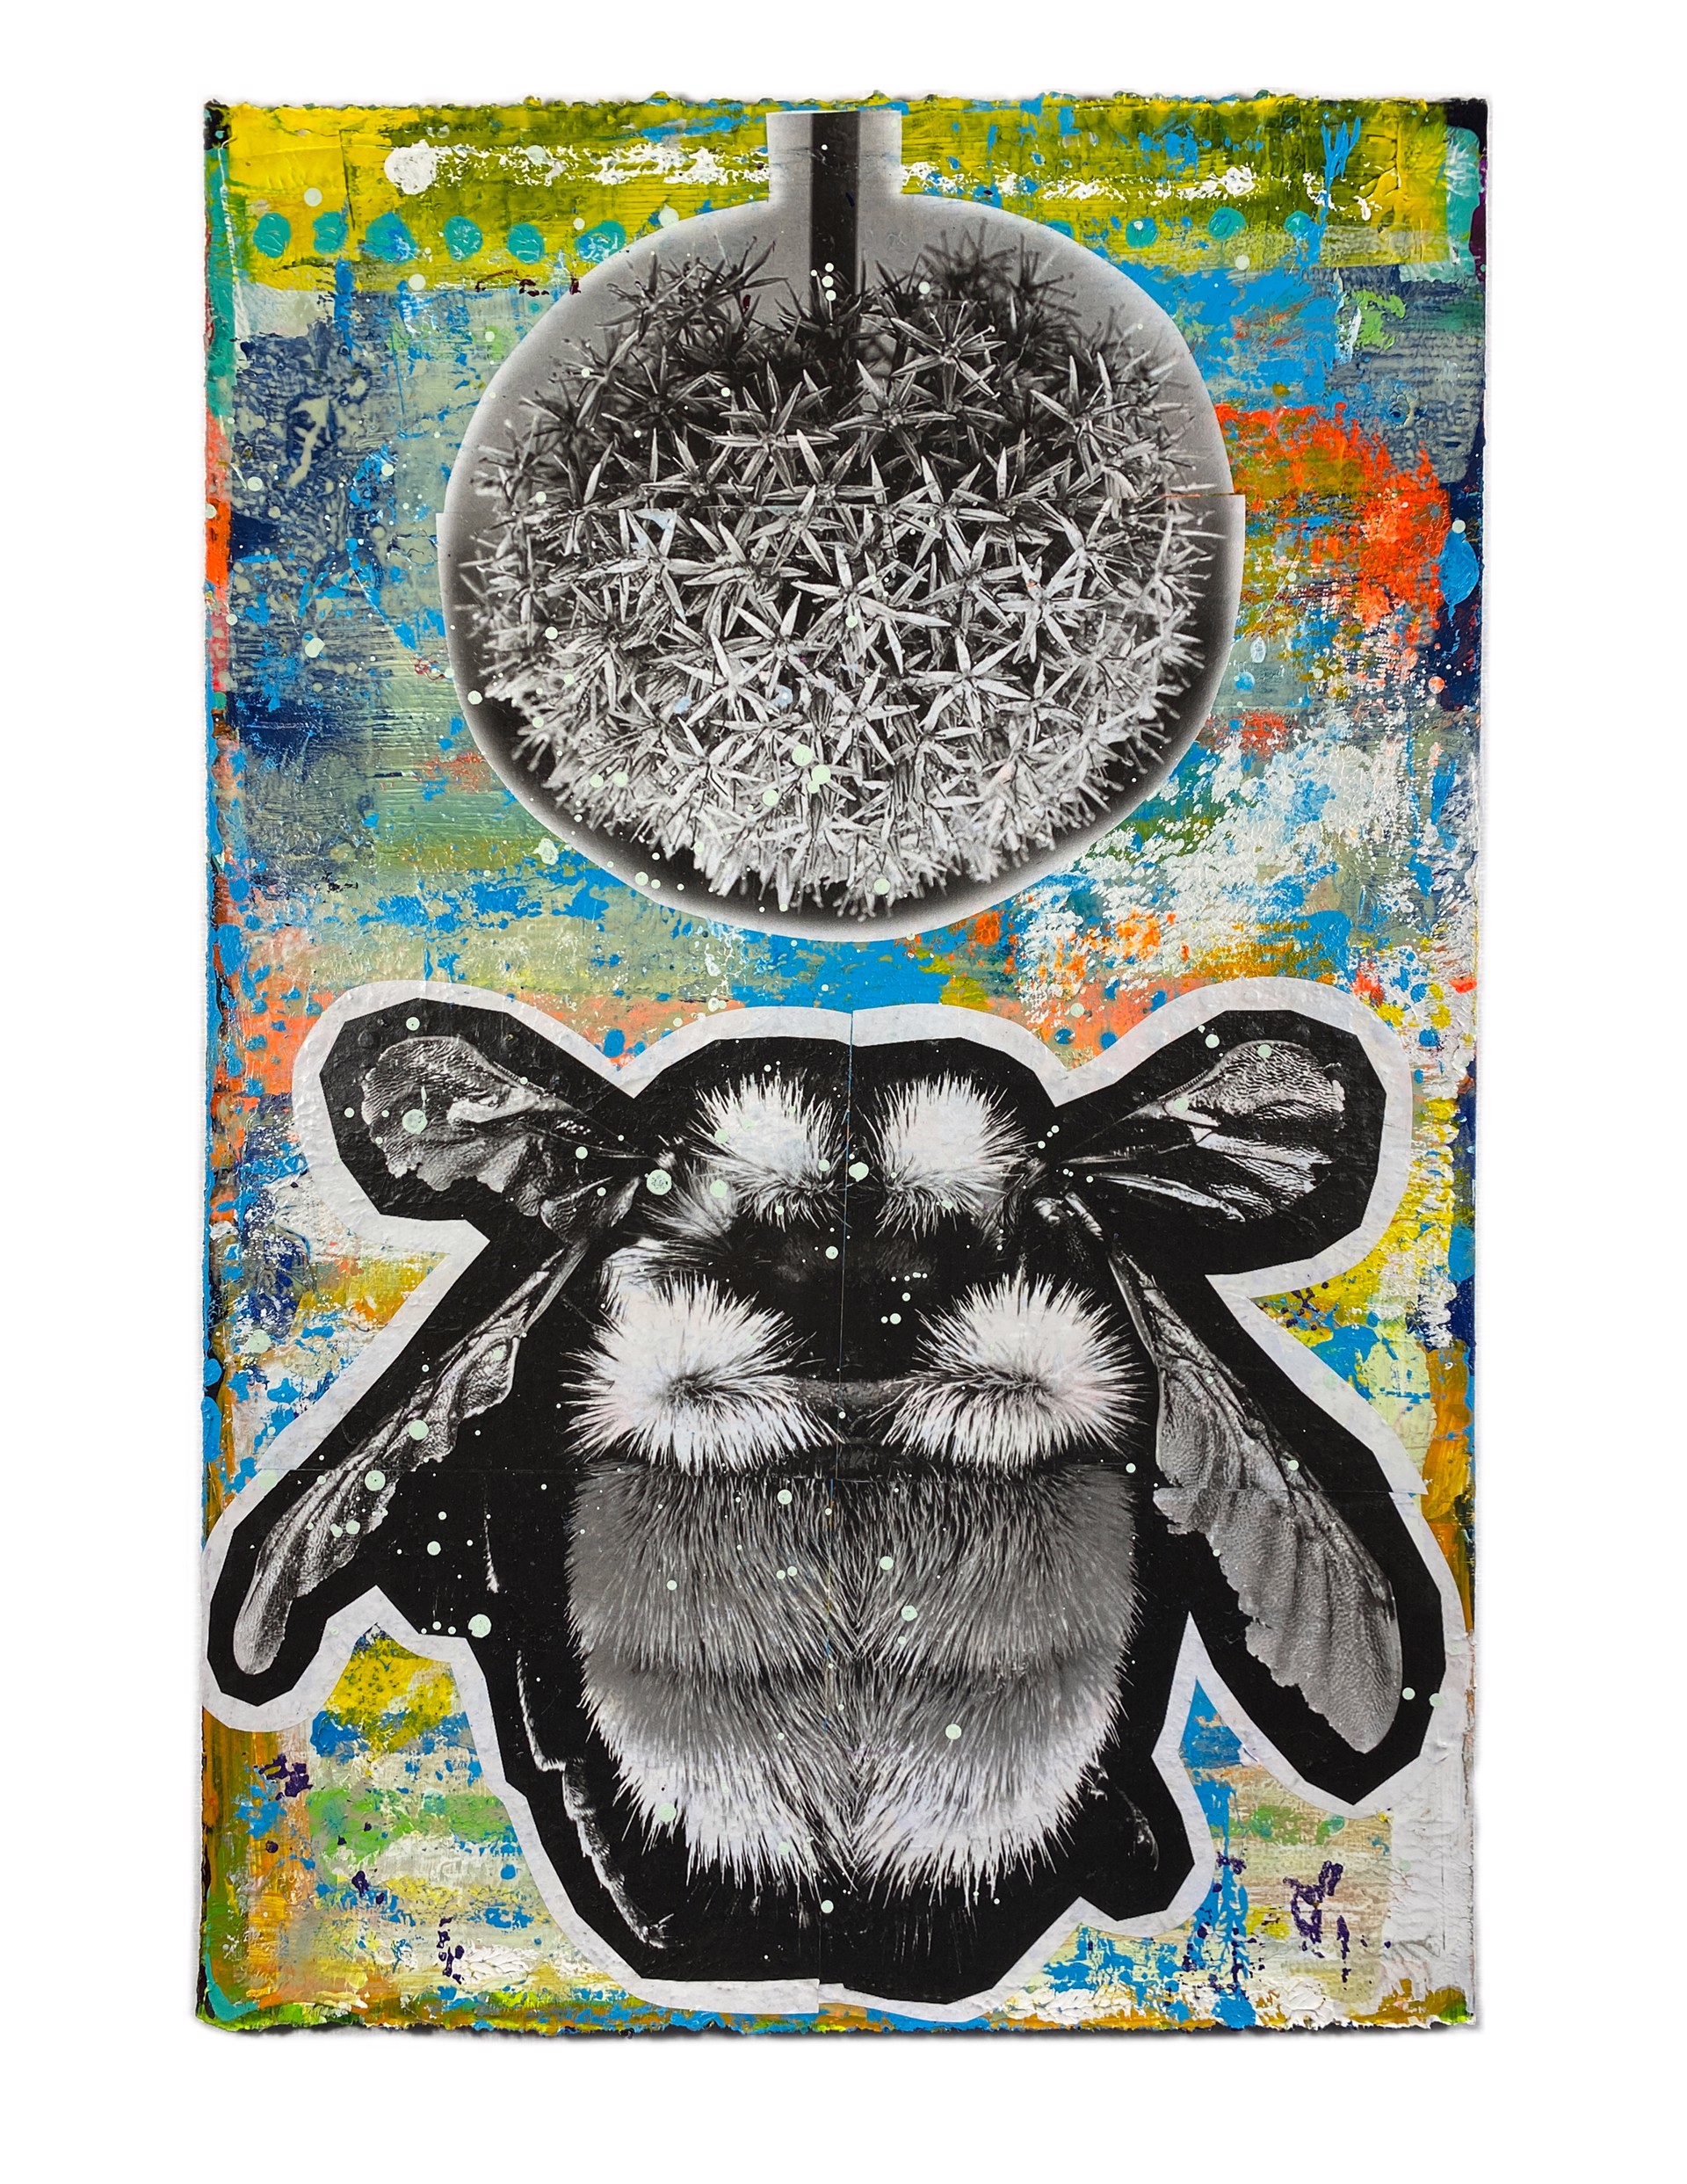 Allium + Bumble Bee by Jason Rohlf